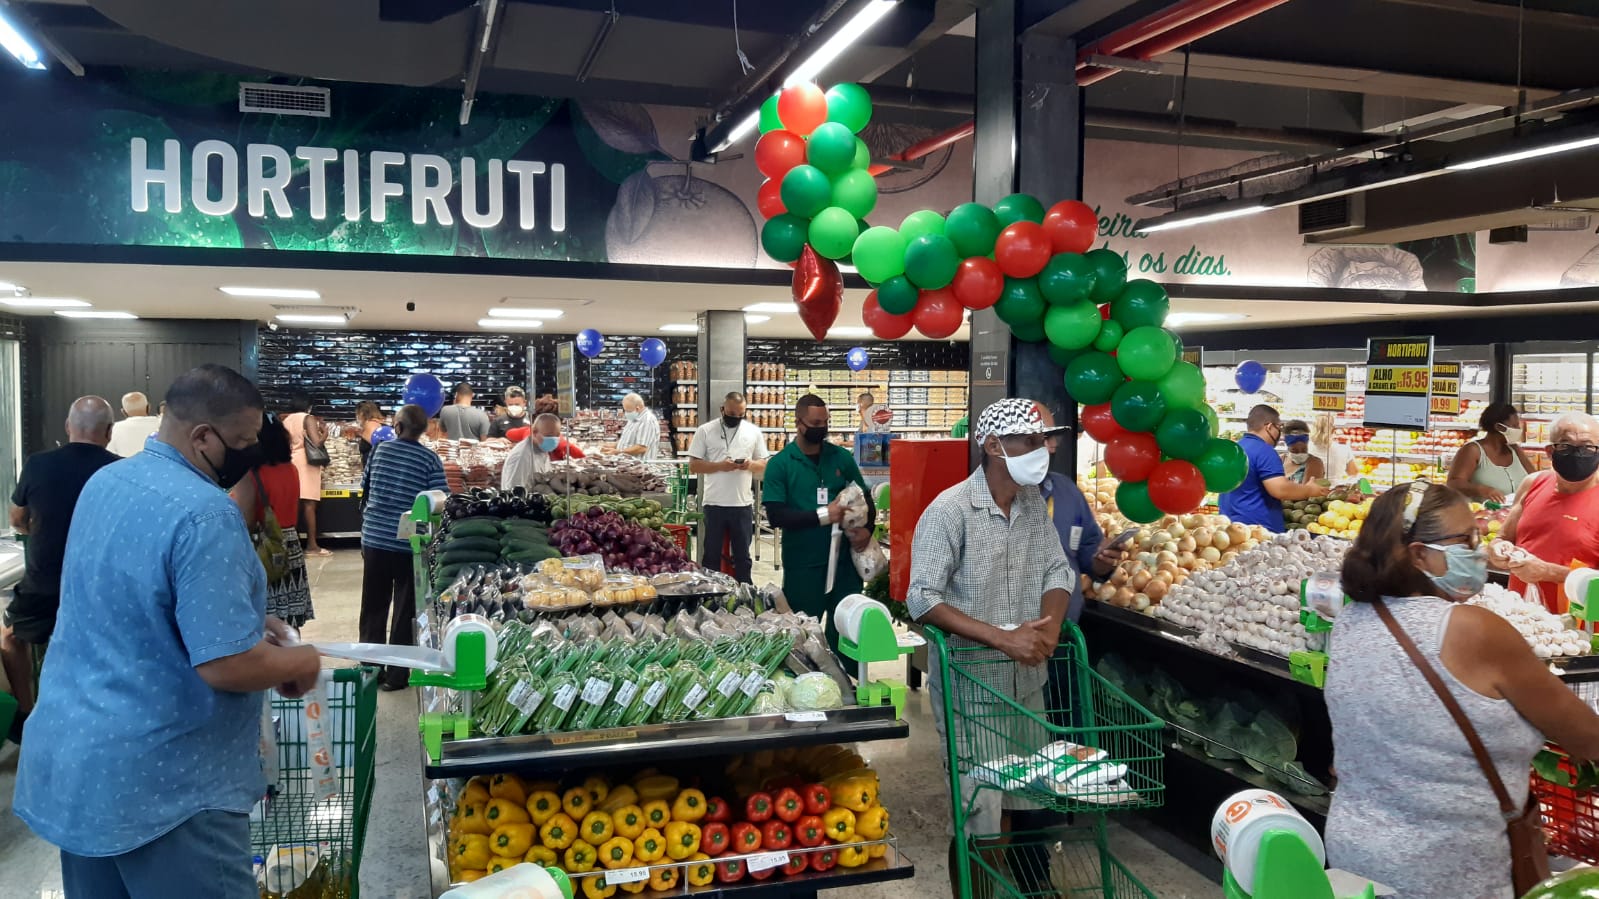 Nova loja do Supermarket em Nova Iguaçu